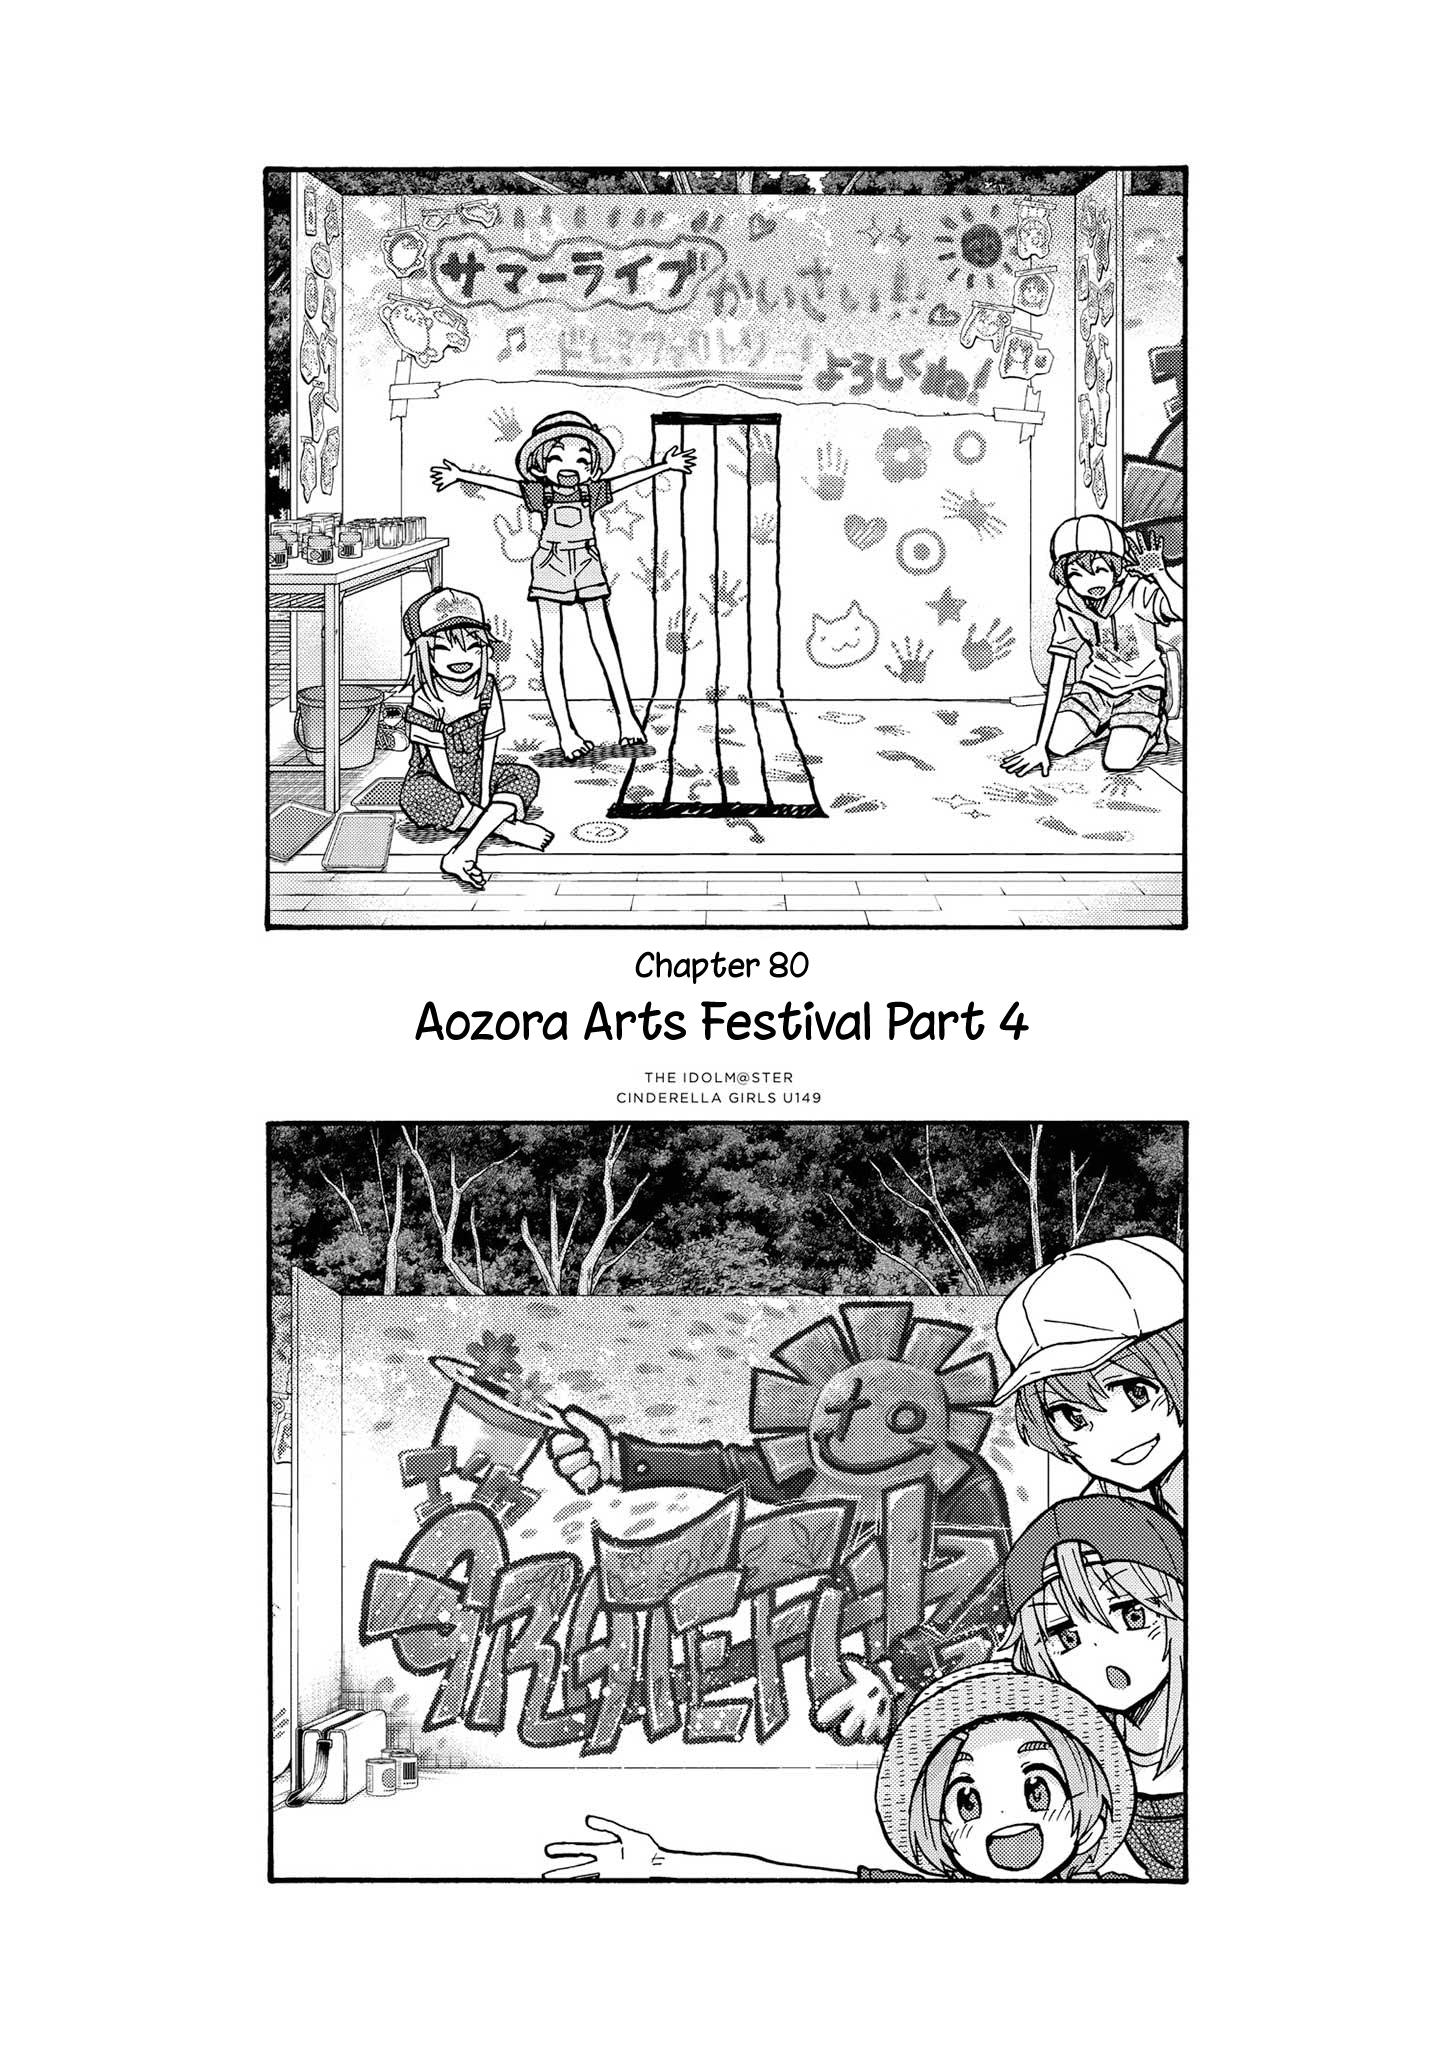 The Idolm@ster Cinderella Girls - U149 Chapter 83: Aozora Art Festival Part 4 - Picture 1